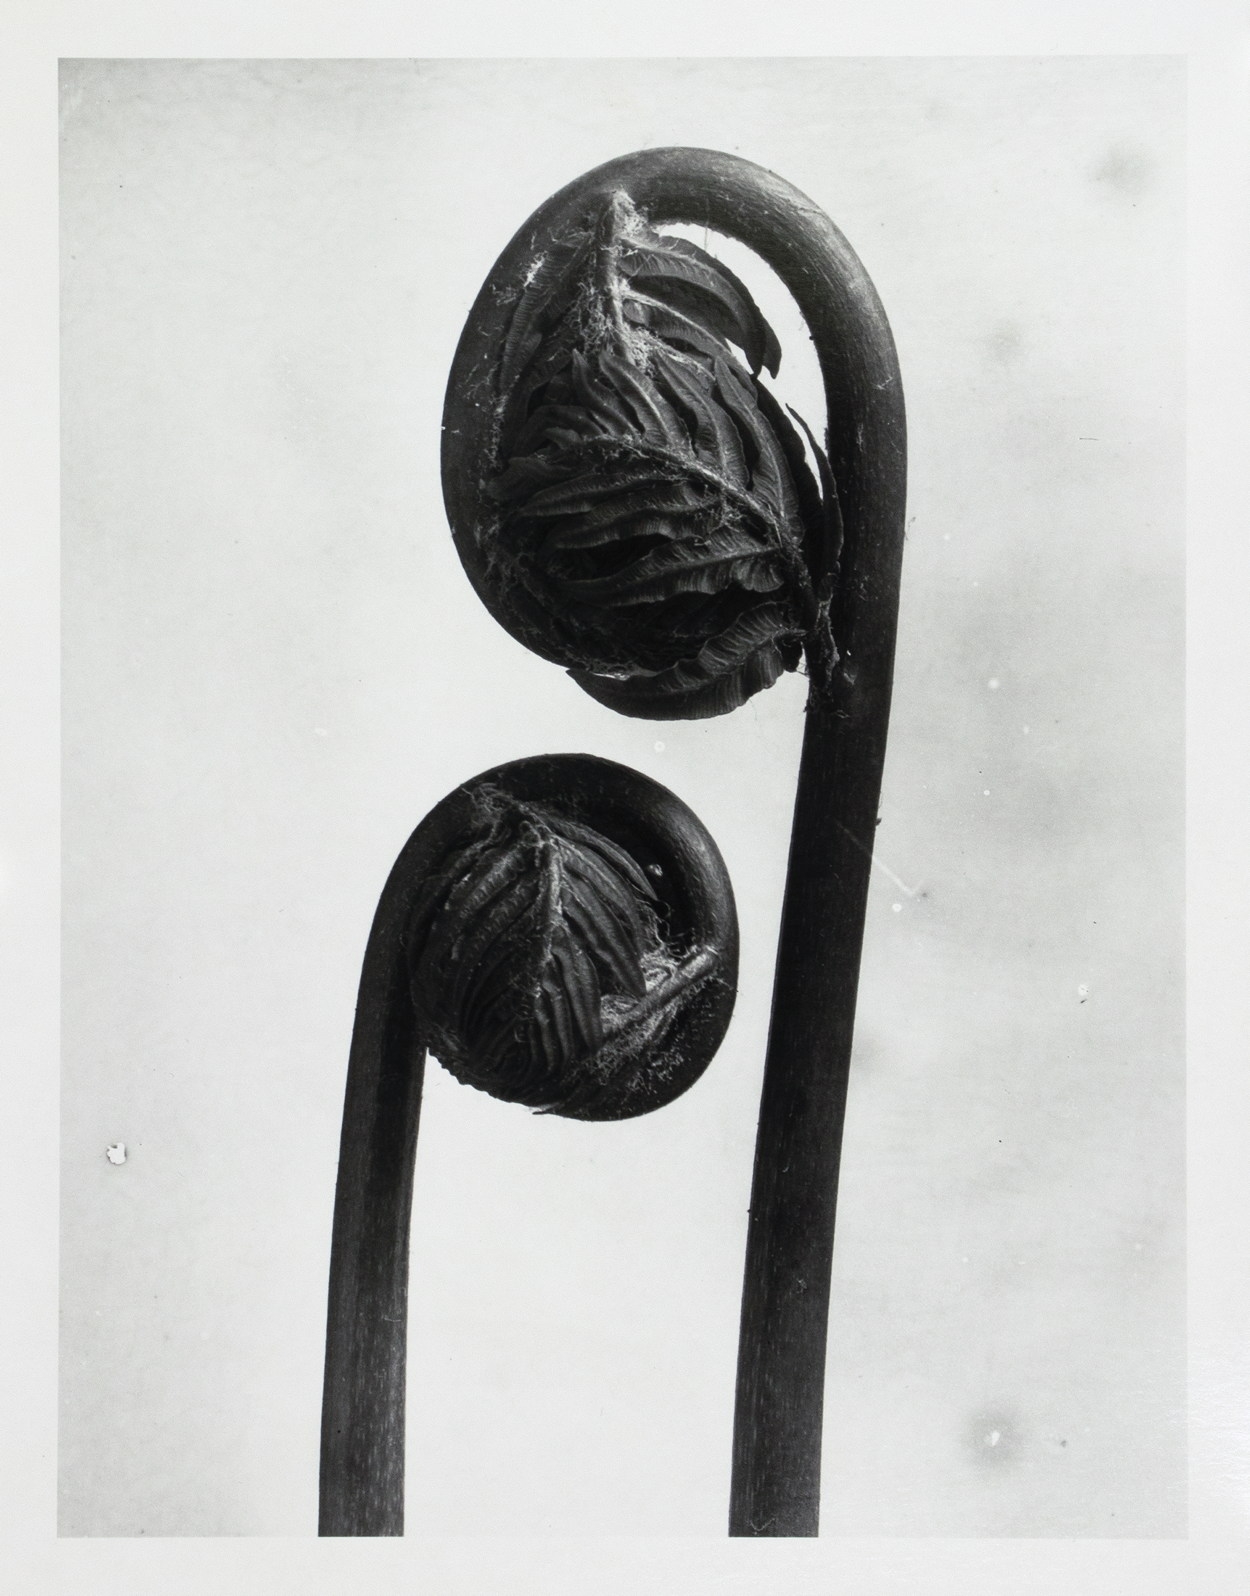 Artwork by Karl Blossfeldt, Pflanzenformen II, Made of photographs